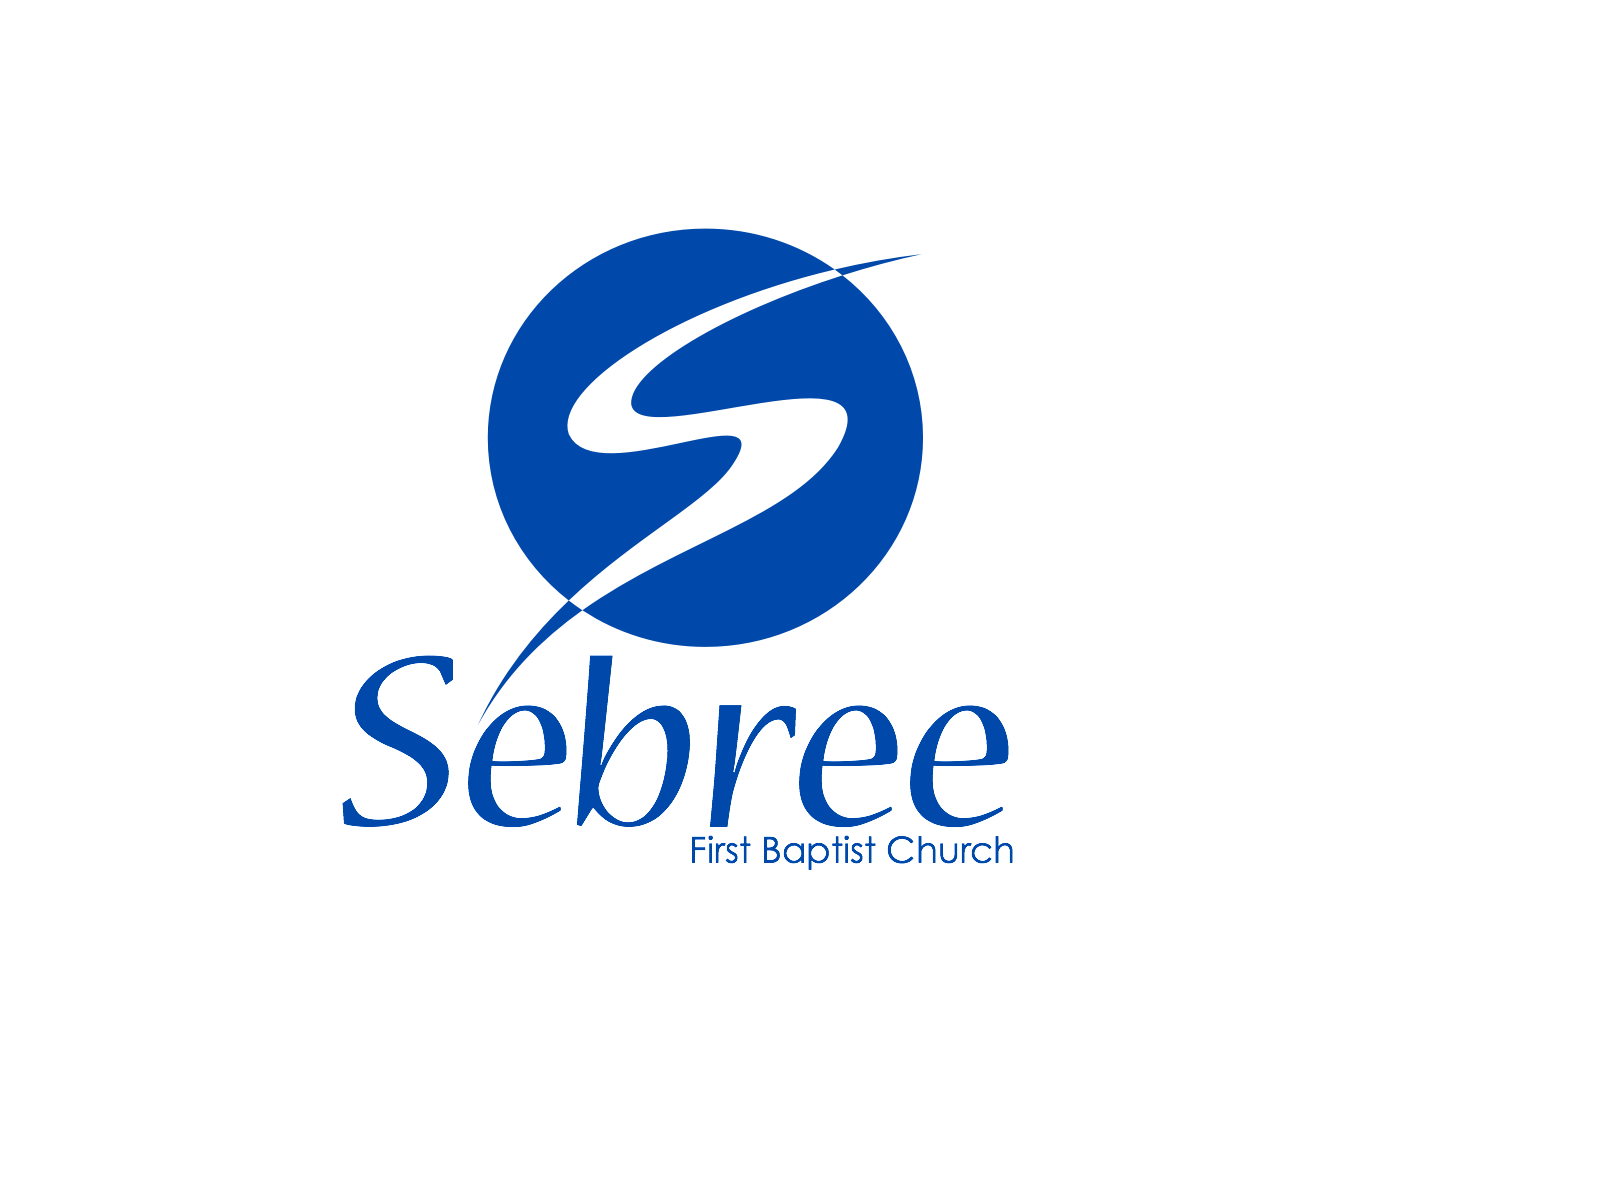 Sebree First Baptist Church